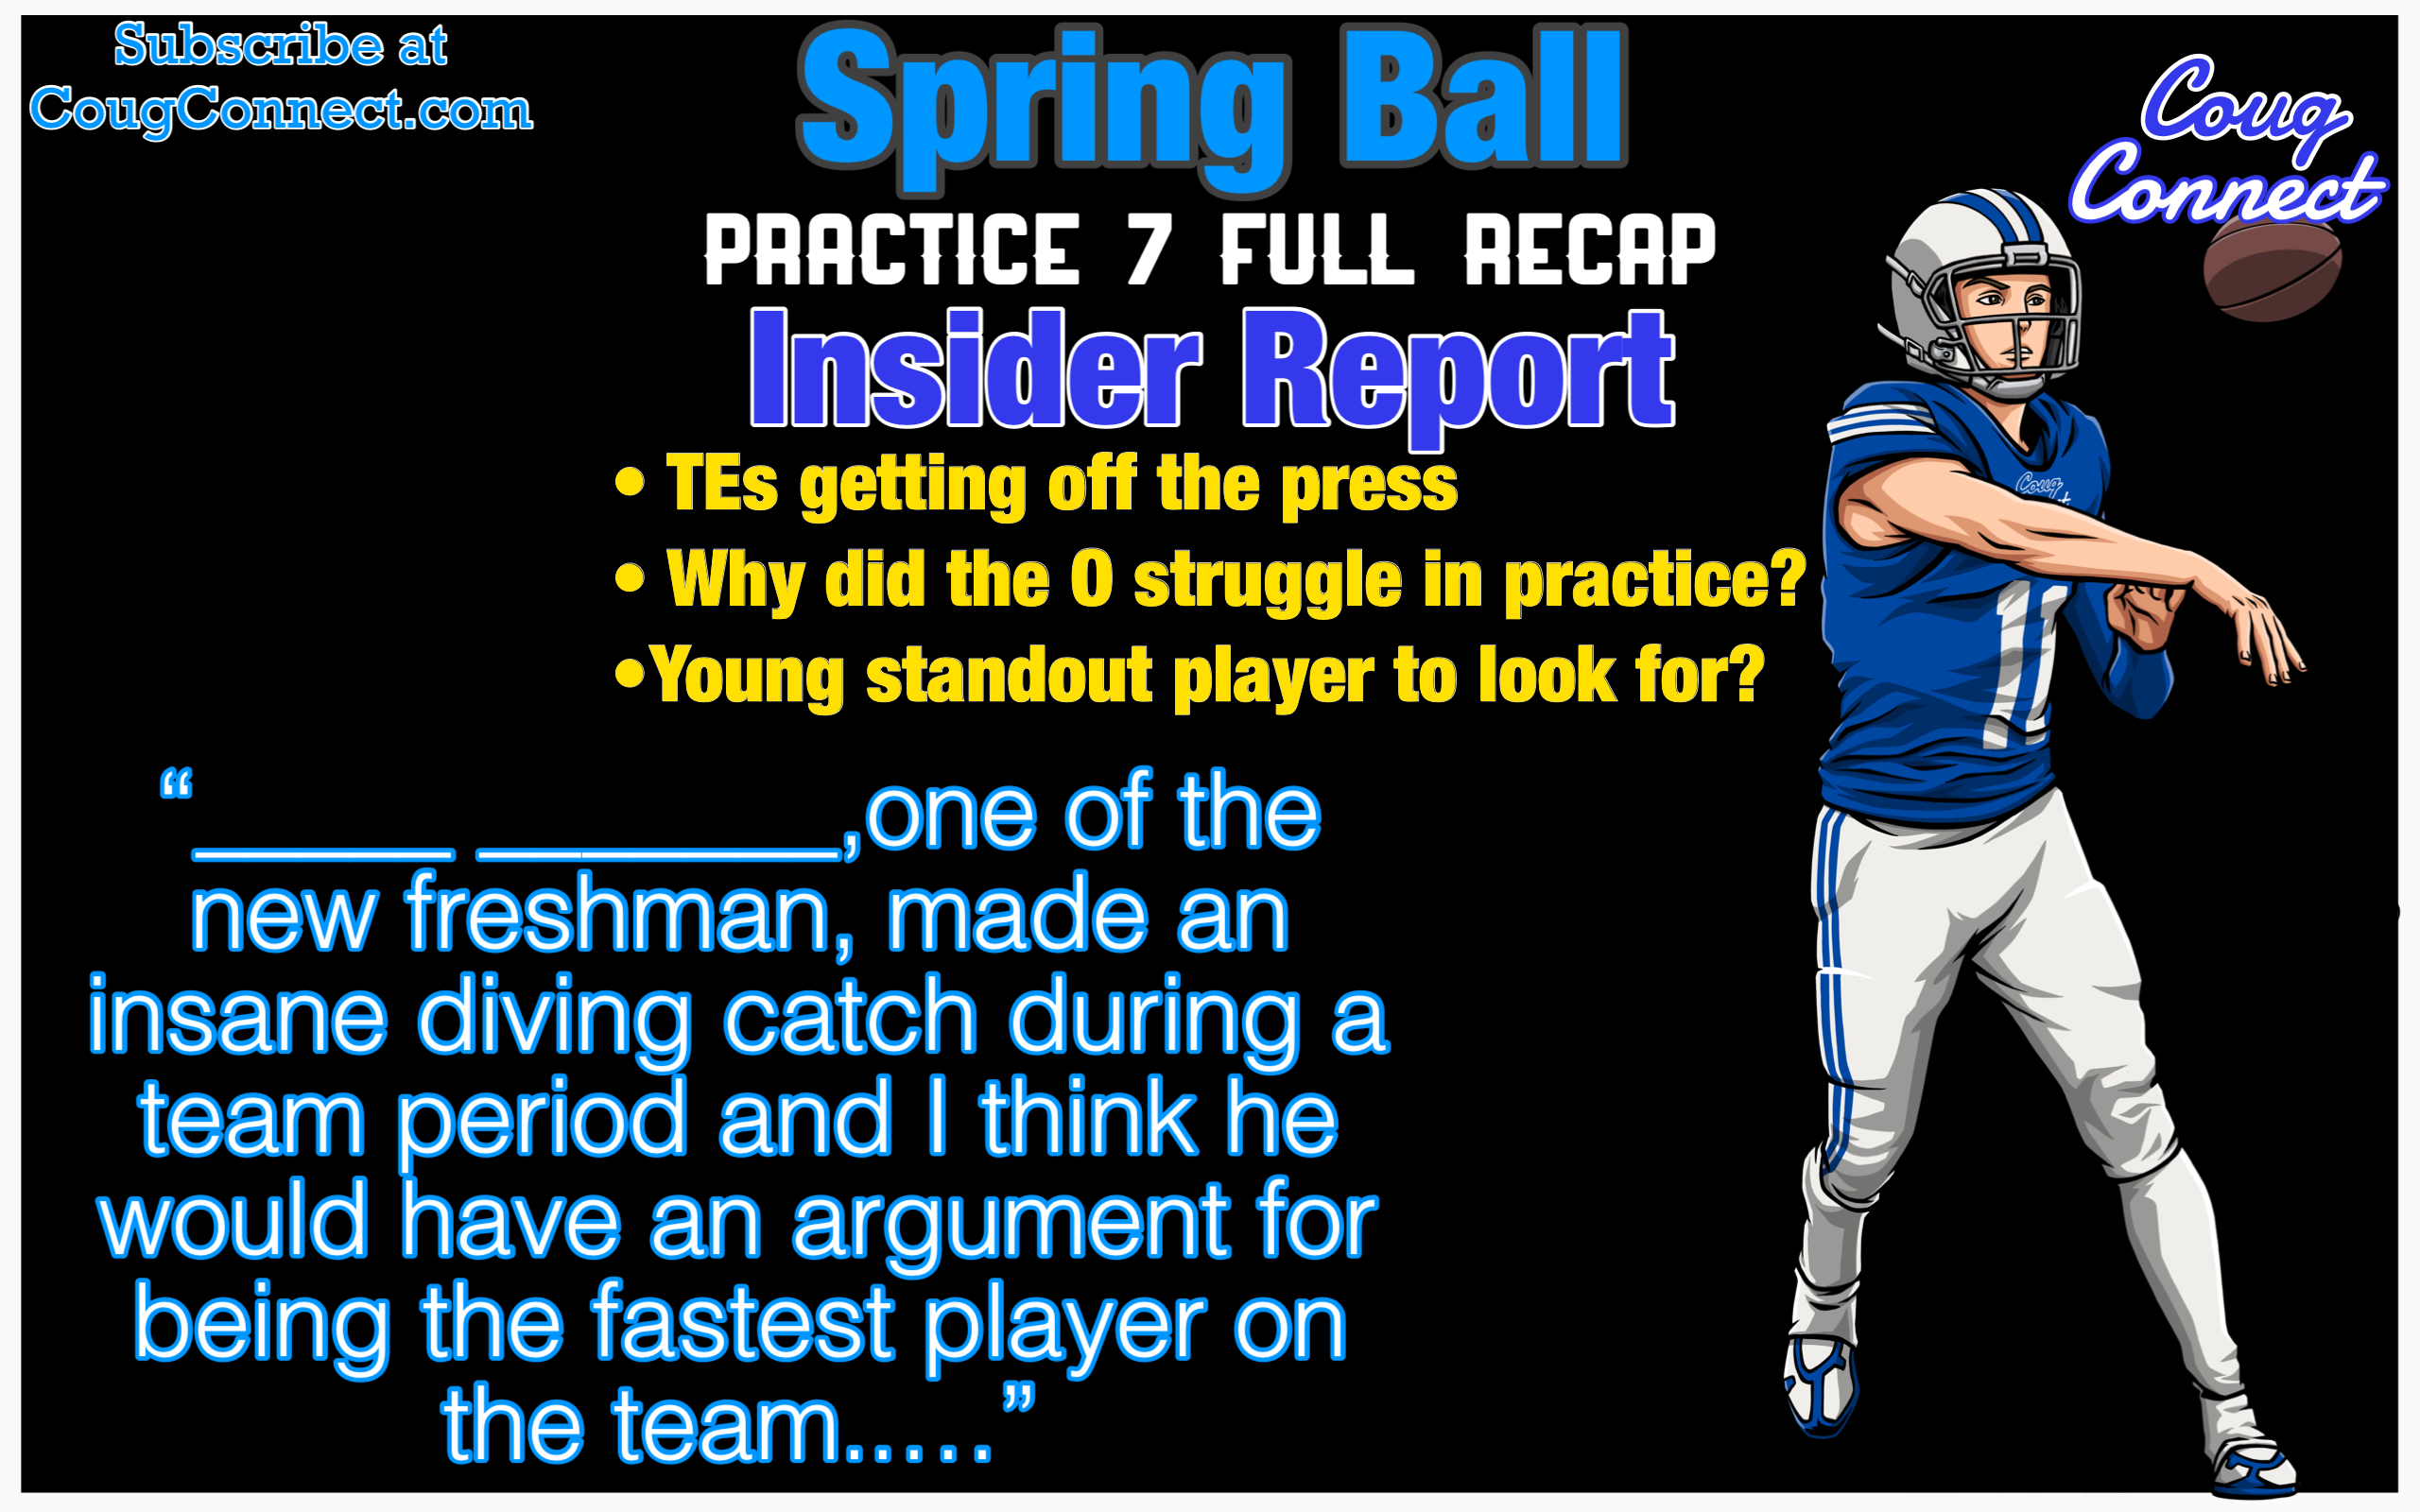 Spring Ball Practice 7, Insider Report